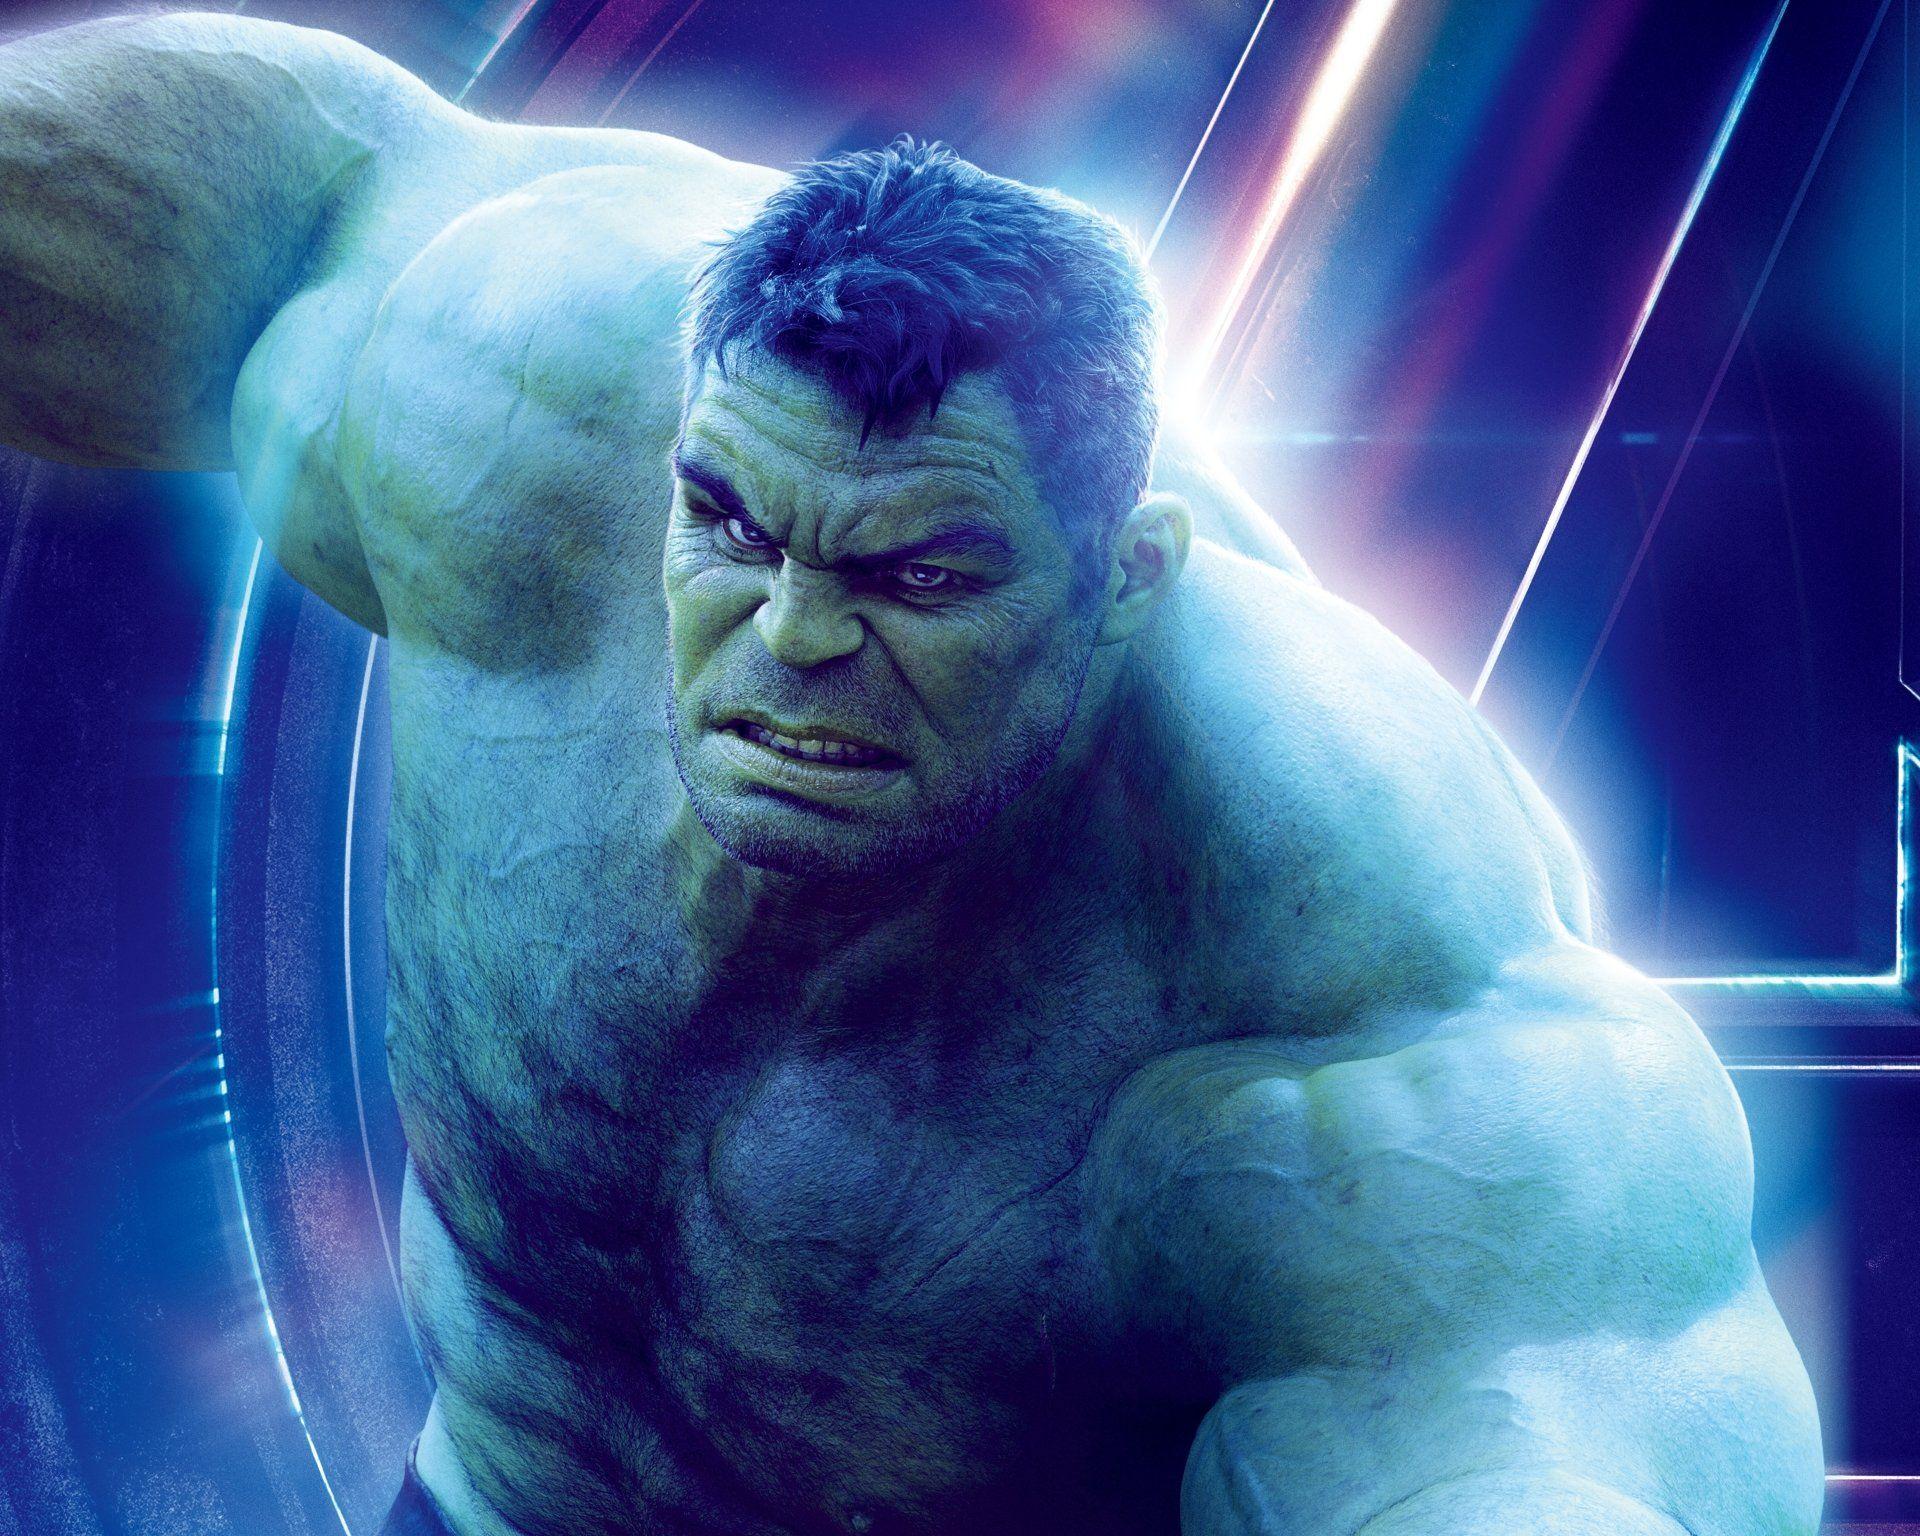 Hulk (Avengers Infinity War) 8k Ultra HD Wallpaper and Background Imagex6283. Hulk avengers, Bruce banner, Avengers tattoo